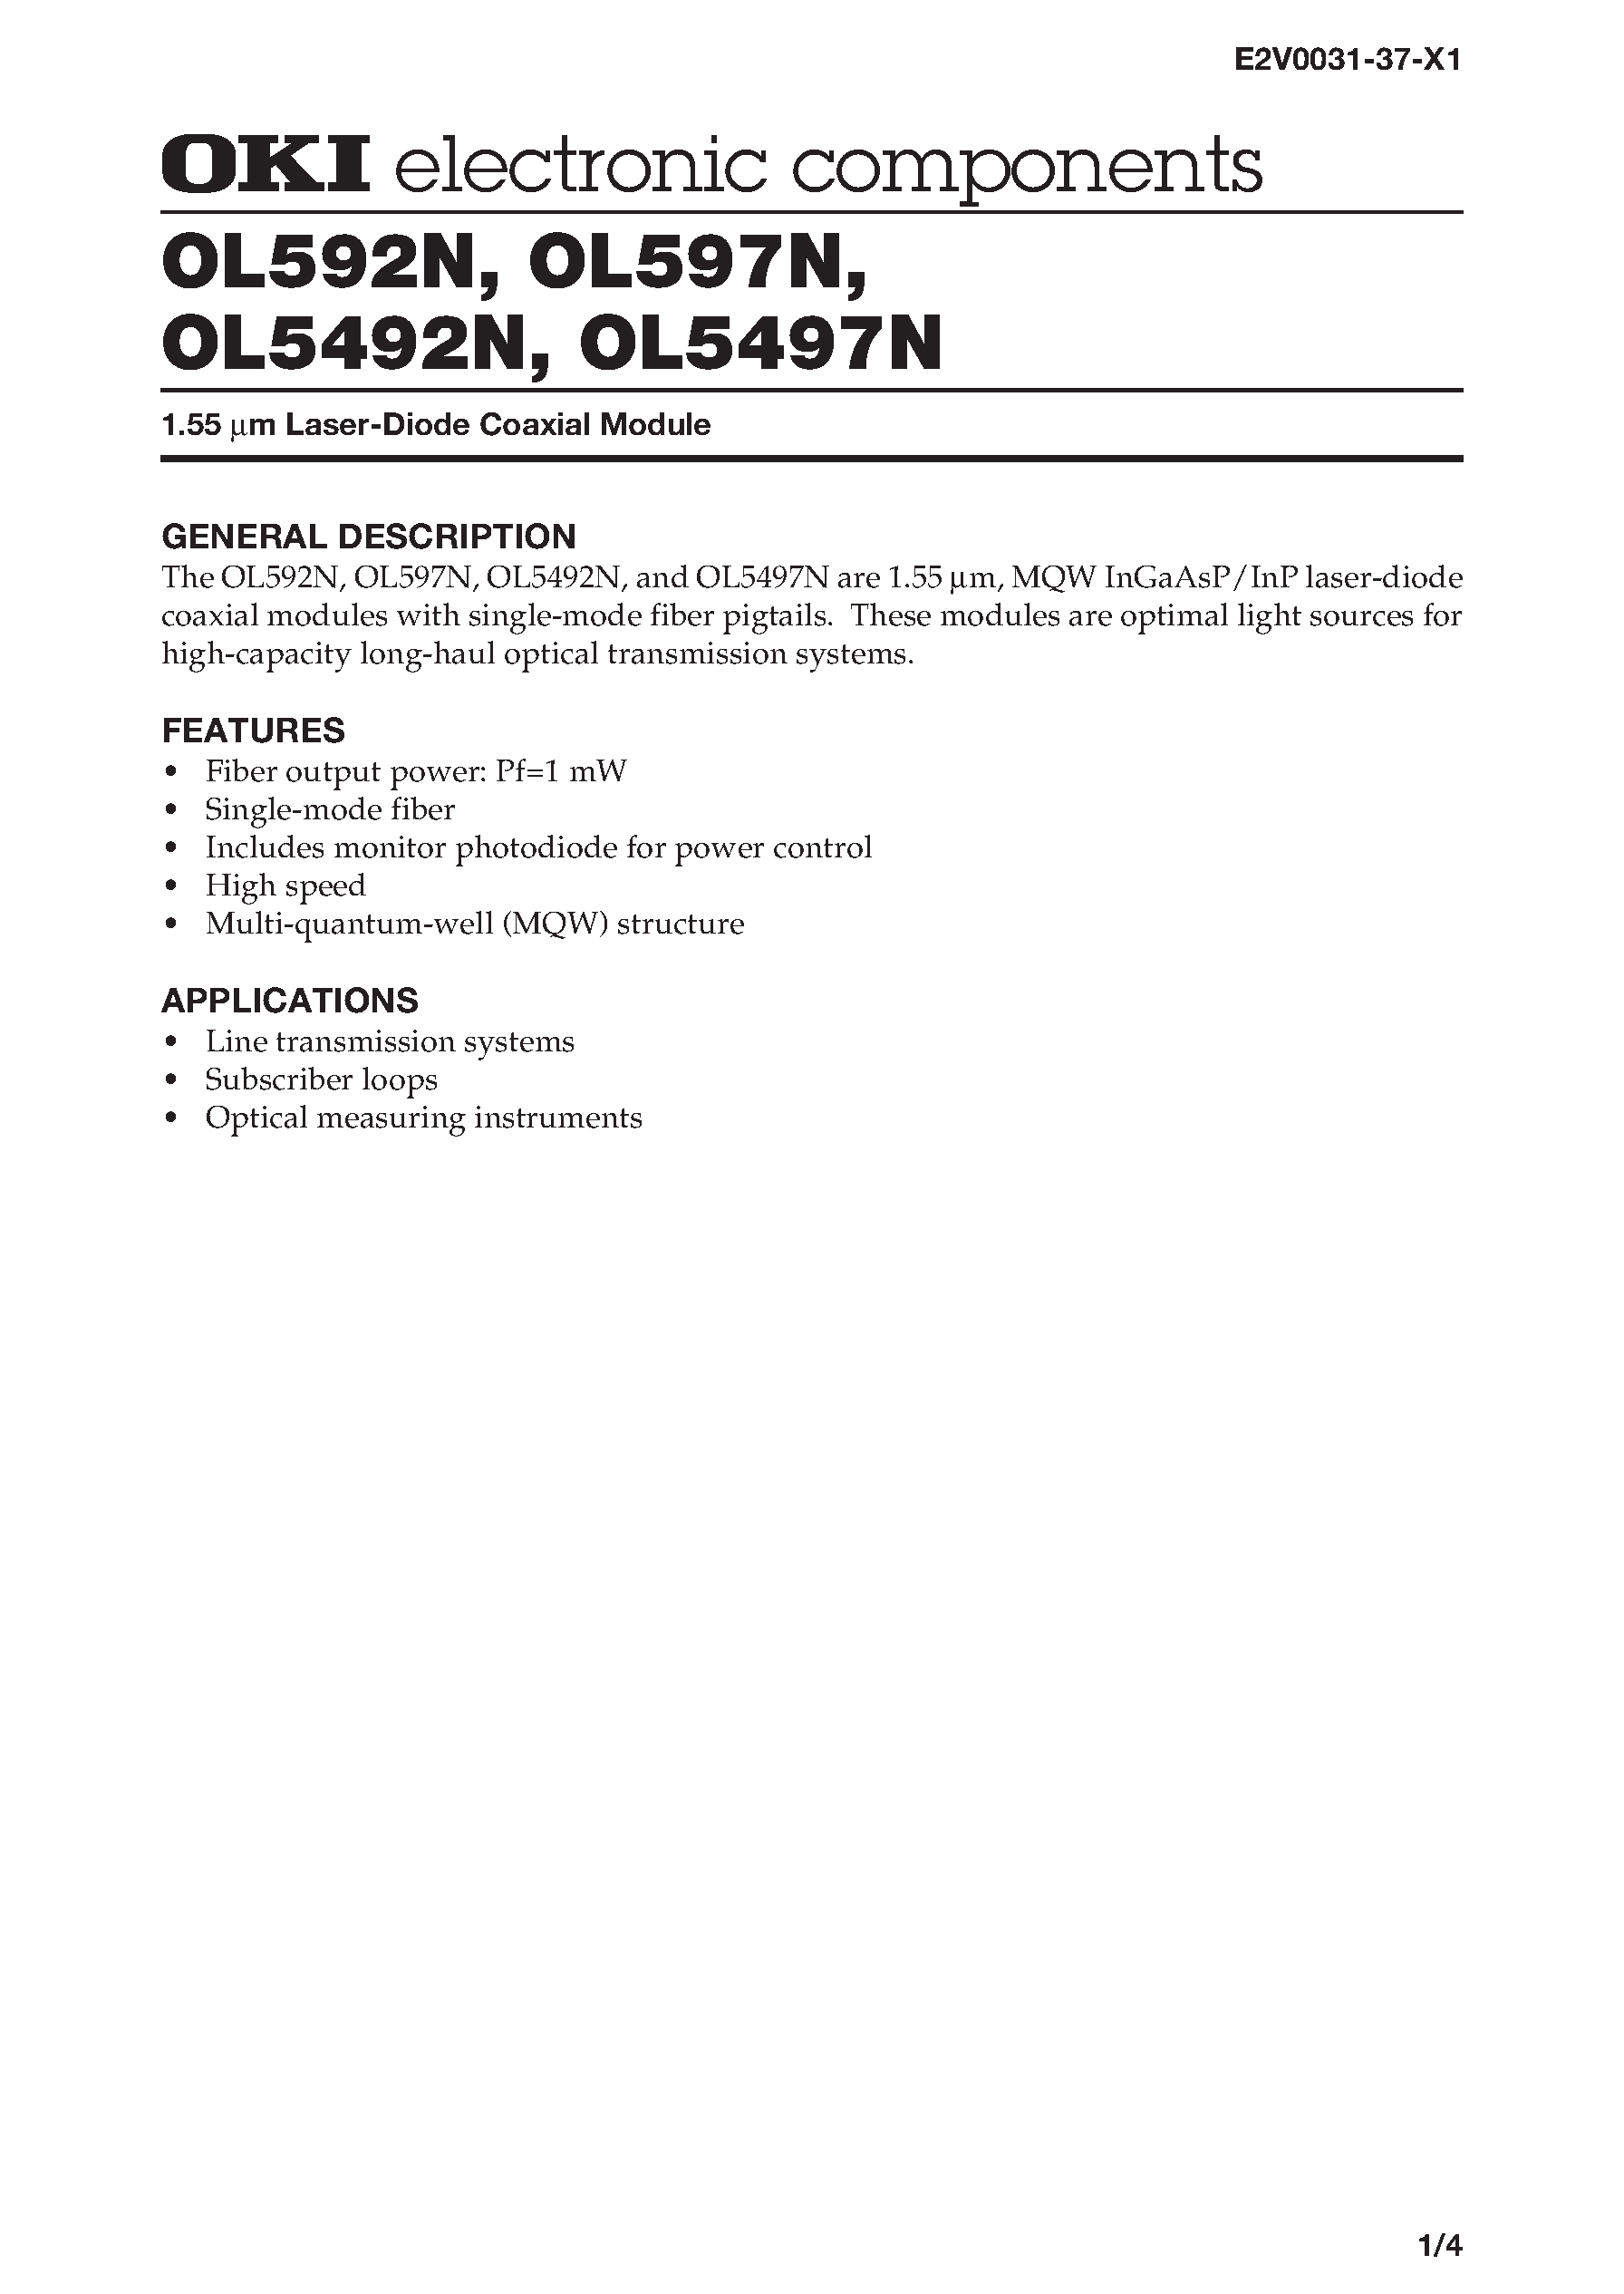 Datasheet OL597N - 1.55 m Laser-Diode Coaxial Module page 1